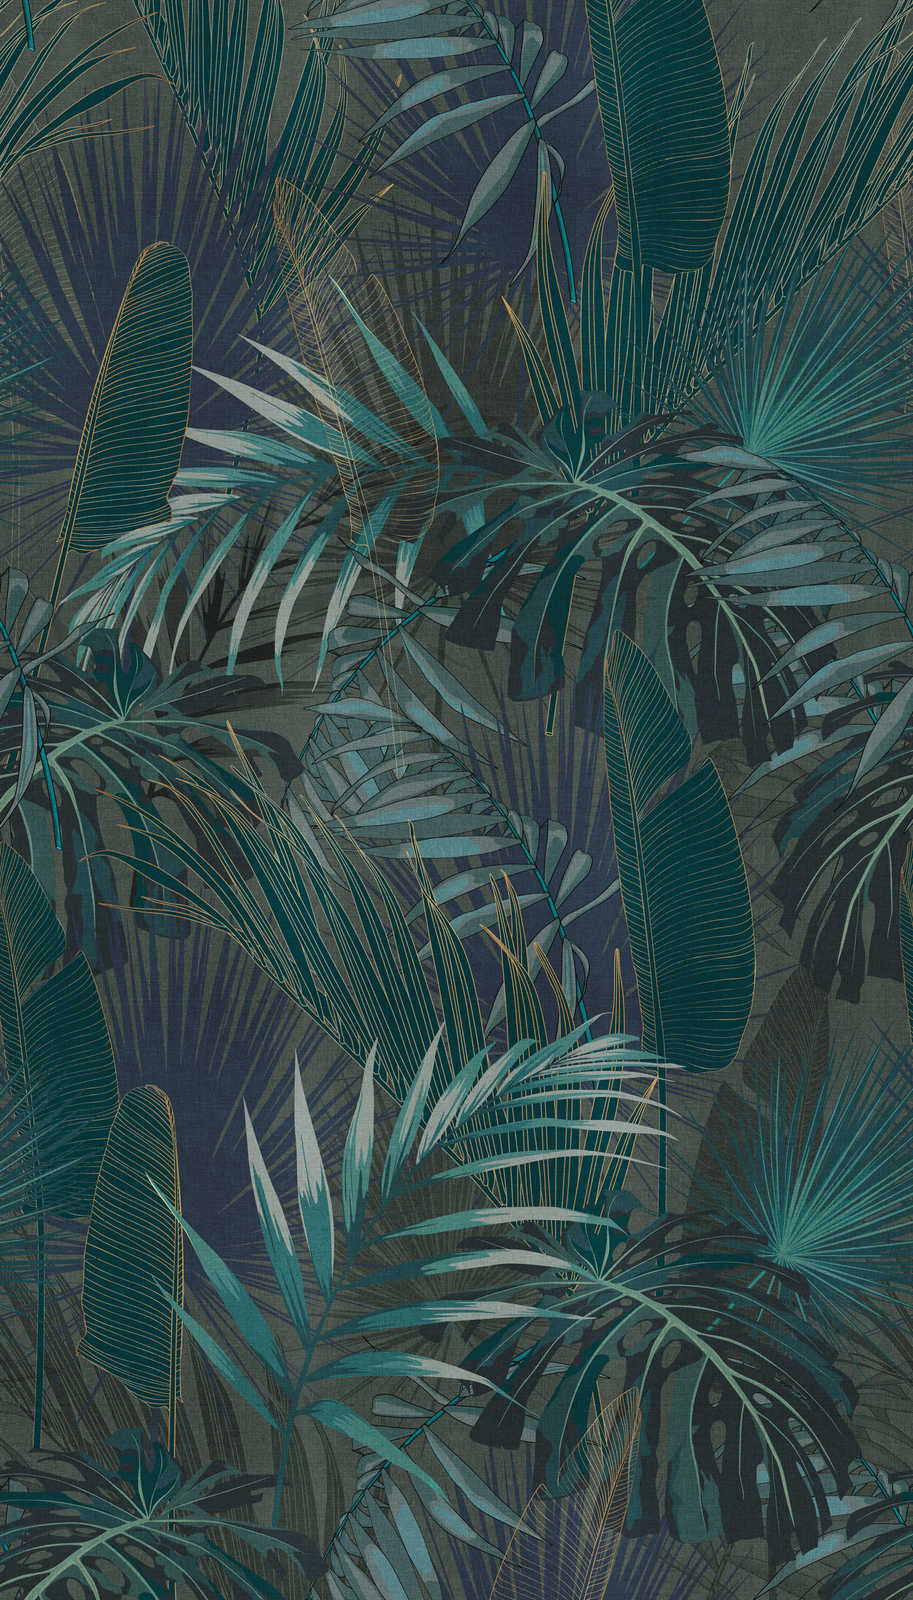             Wallpaper with jungle leaves motif - petrol, blue, green
        